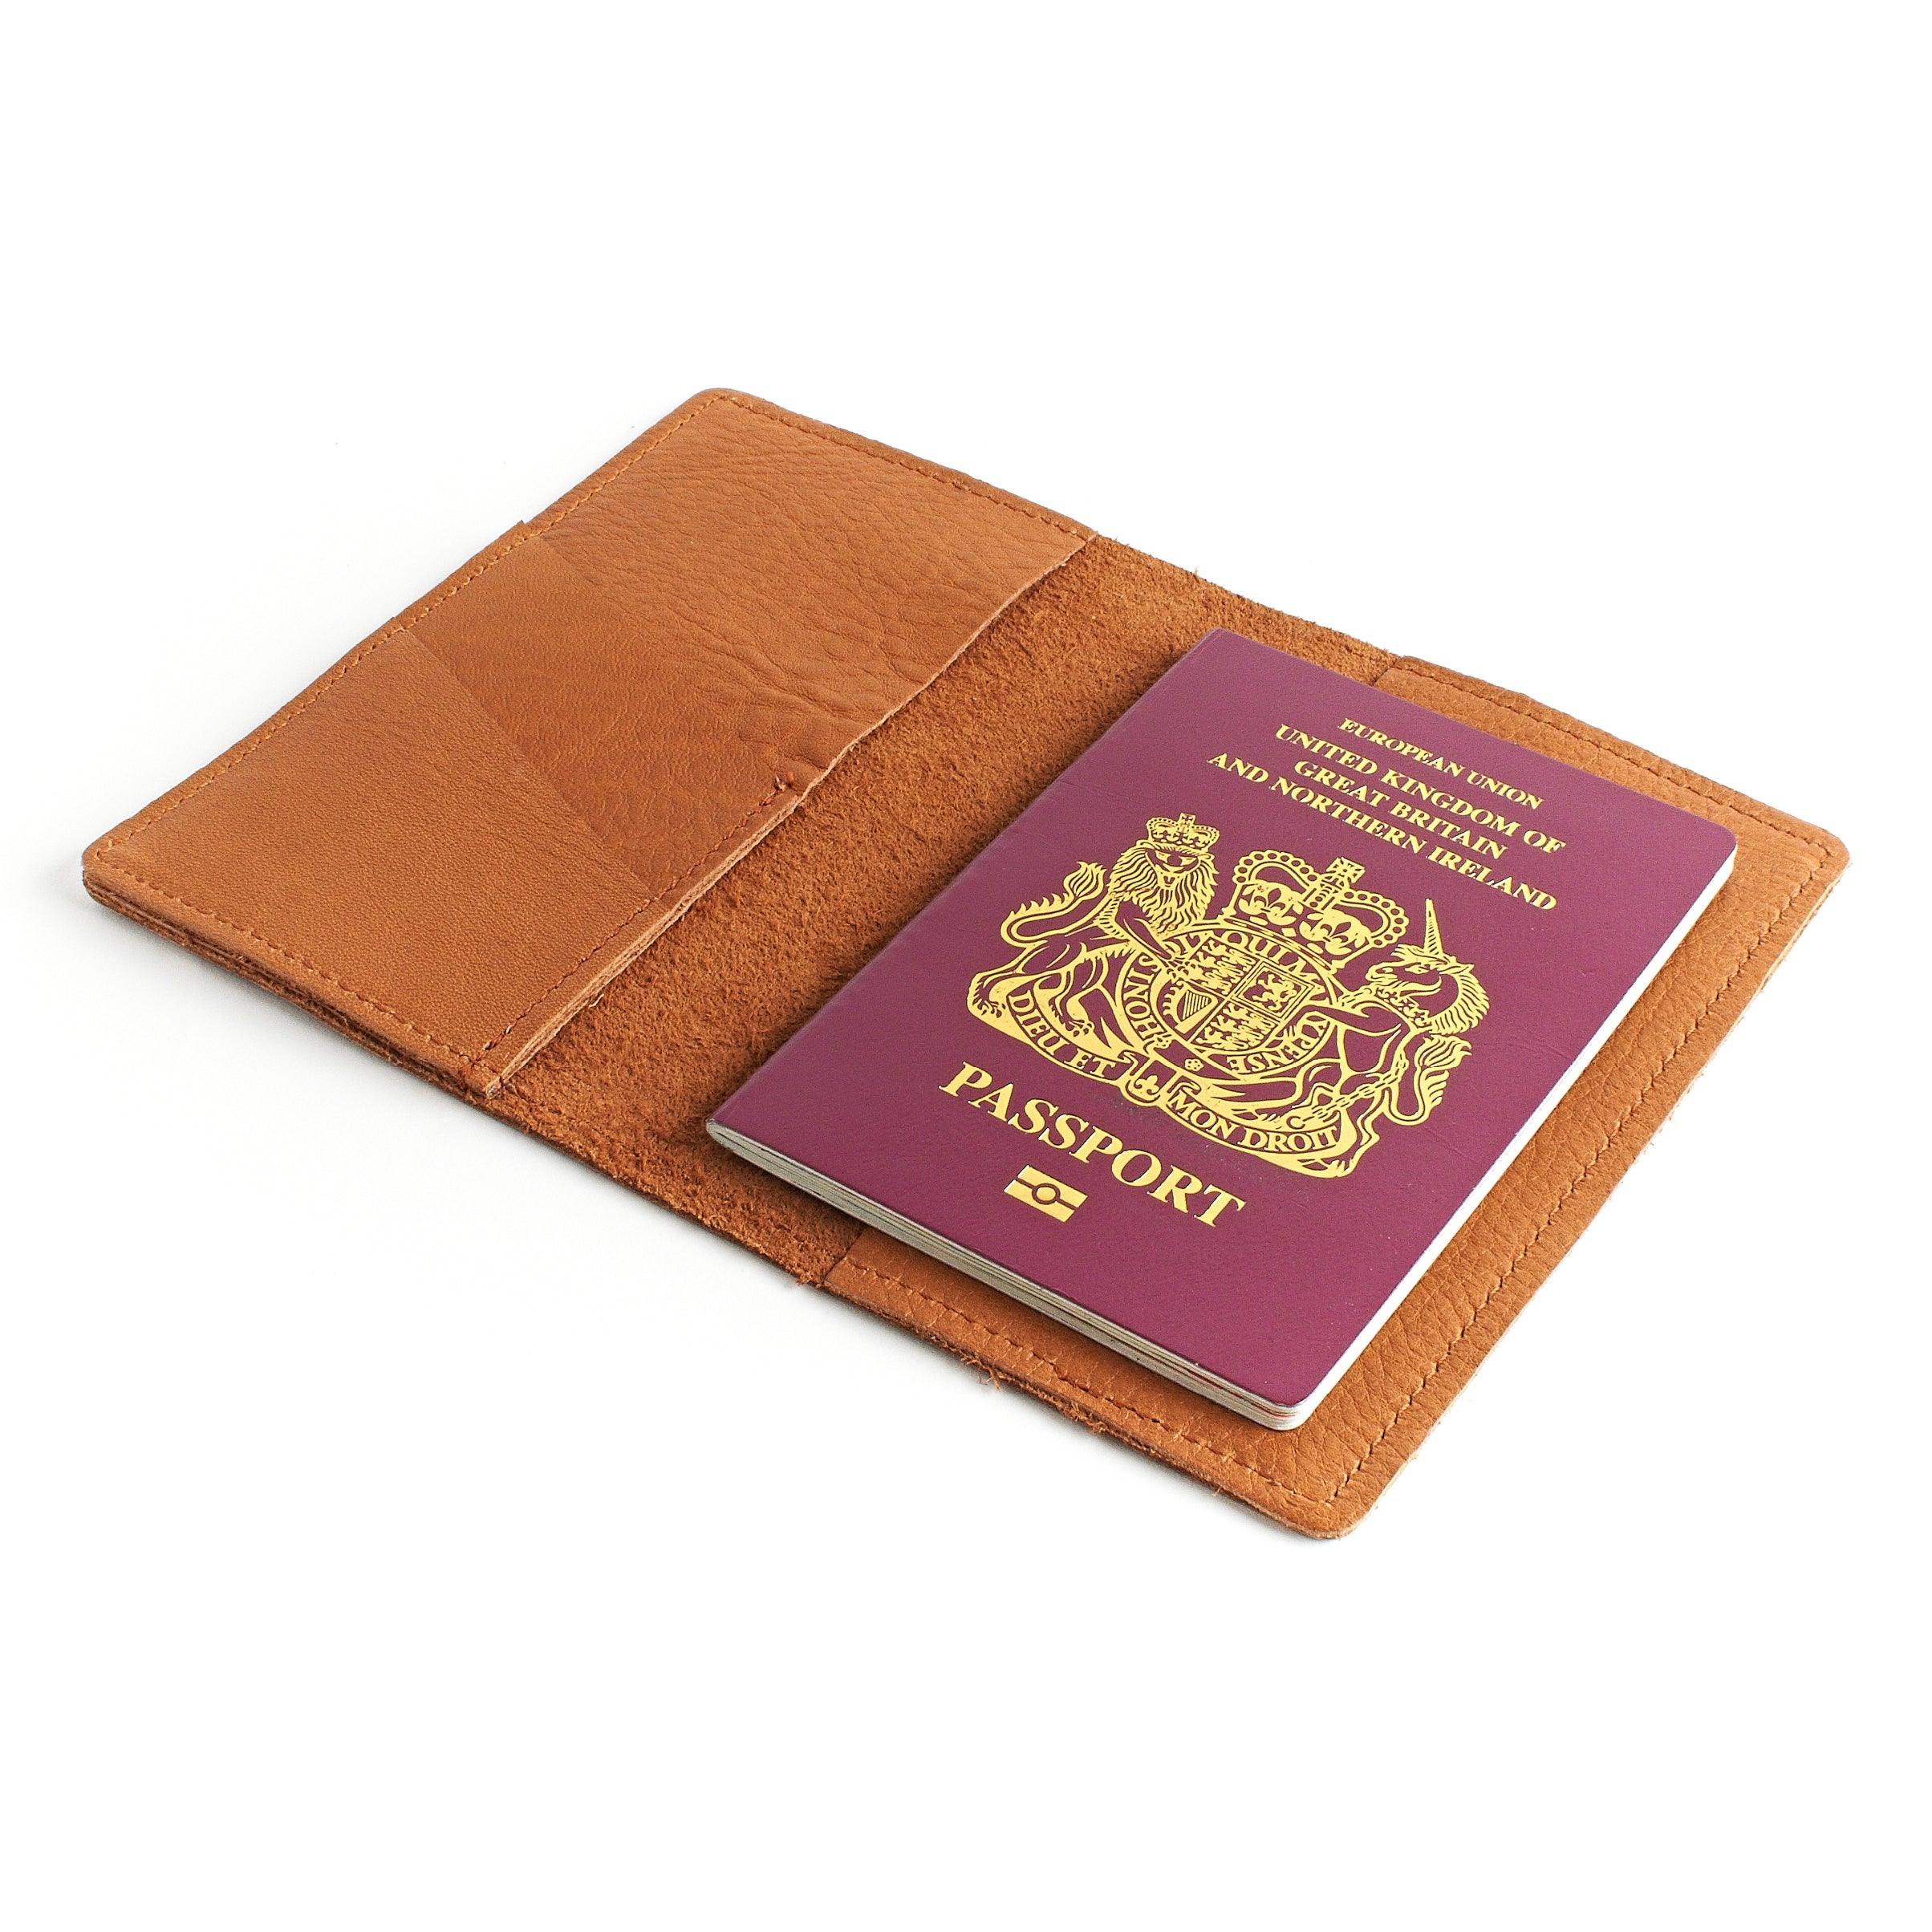 Tan Leather Passport Holder